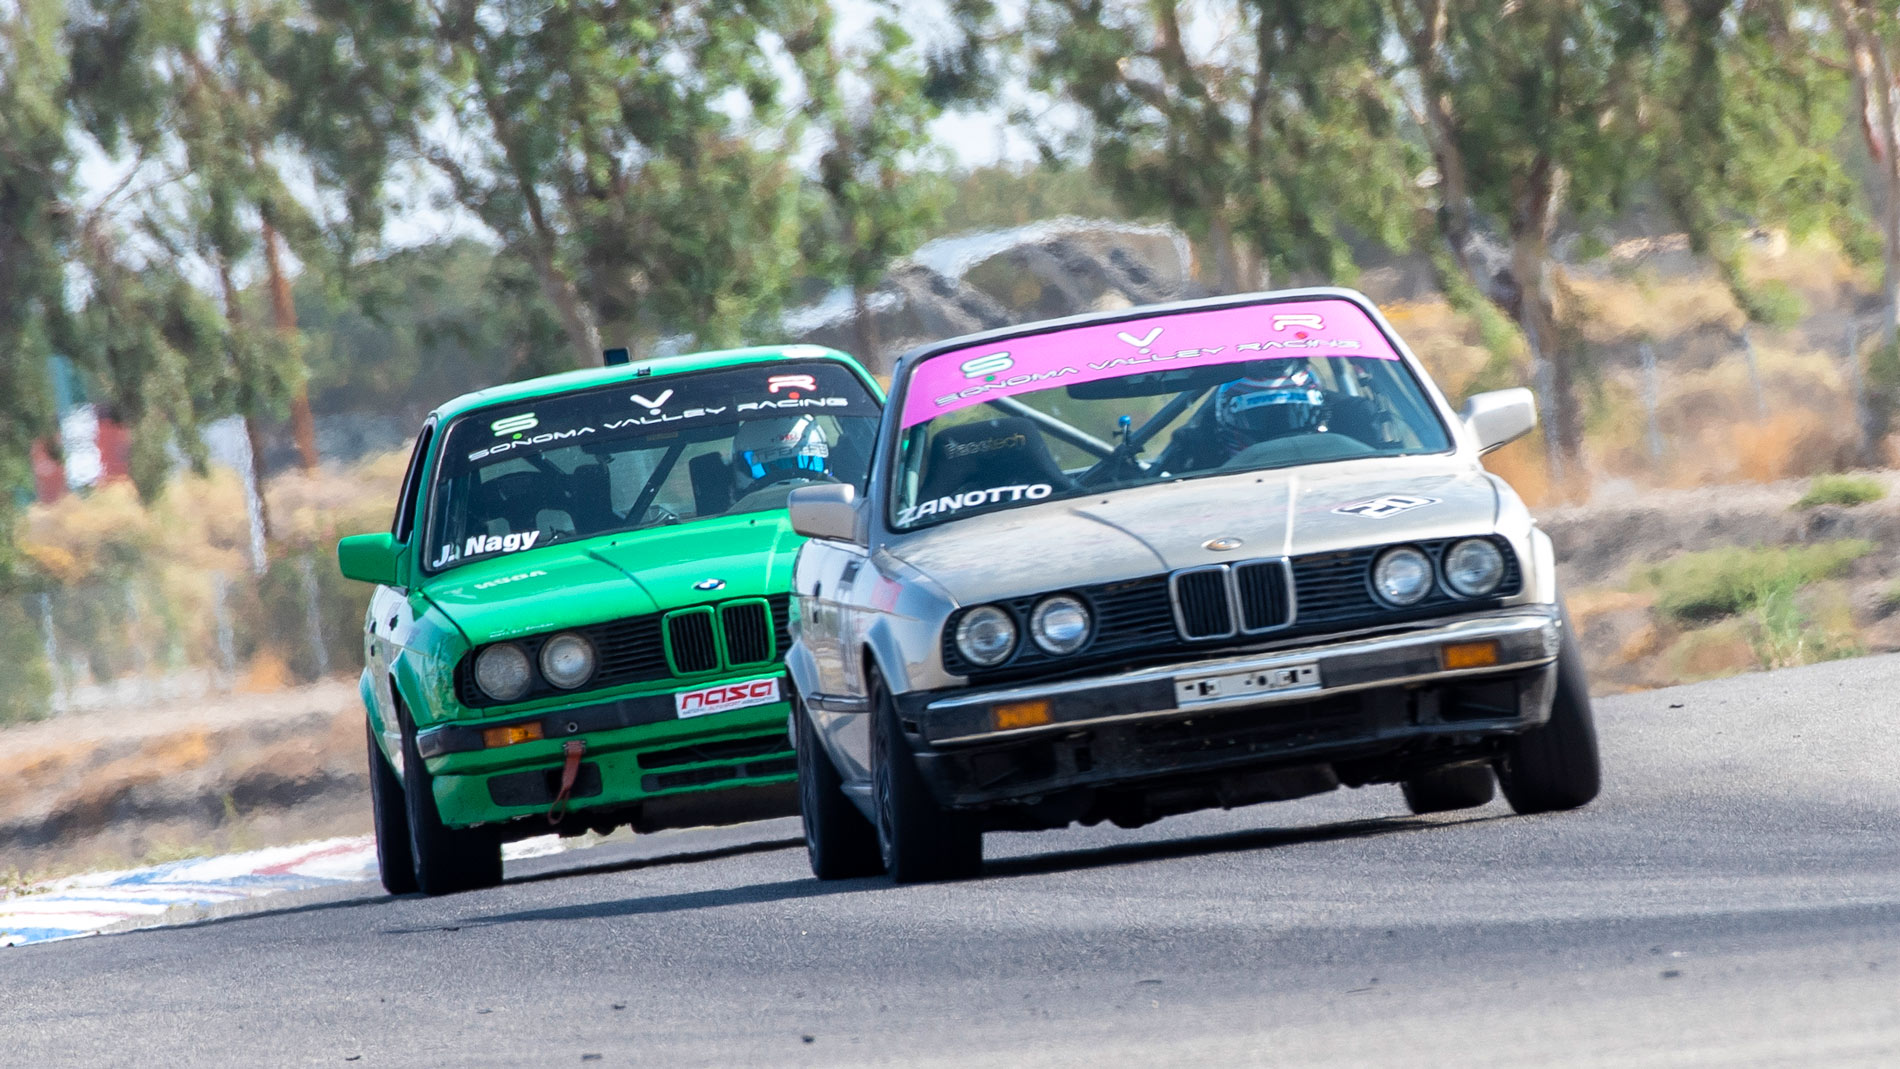 Two BMWs racing